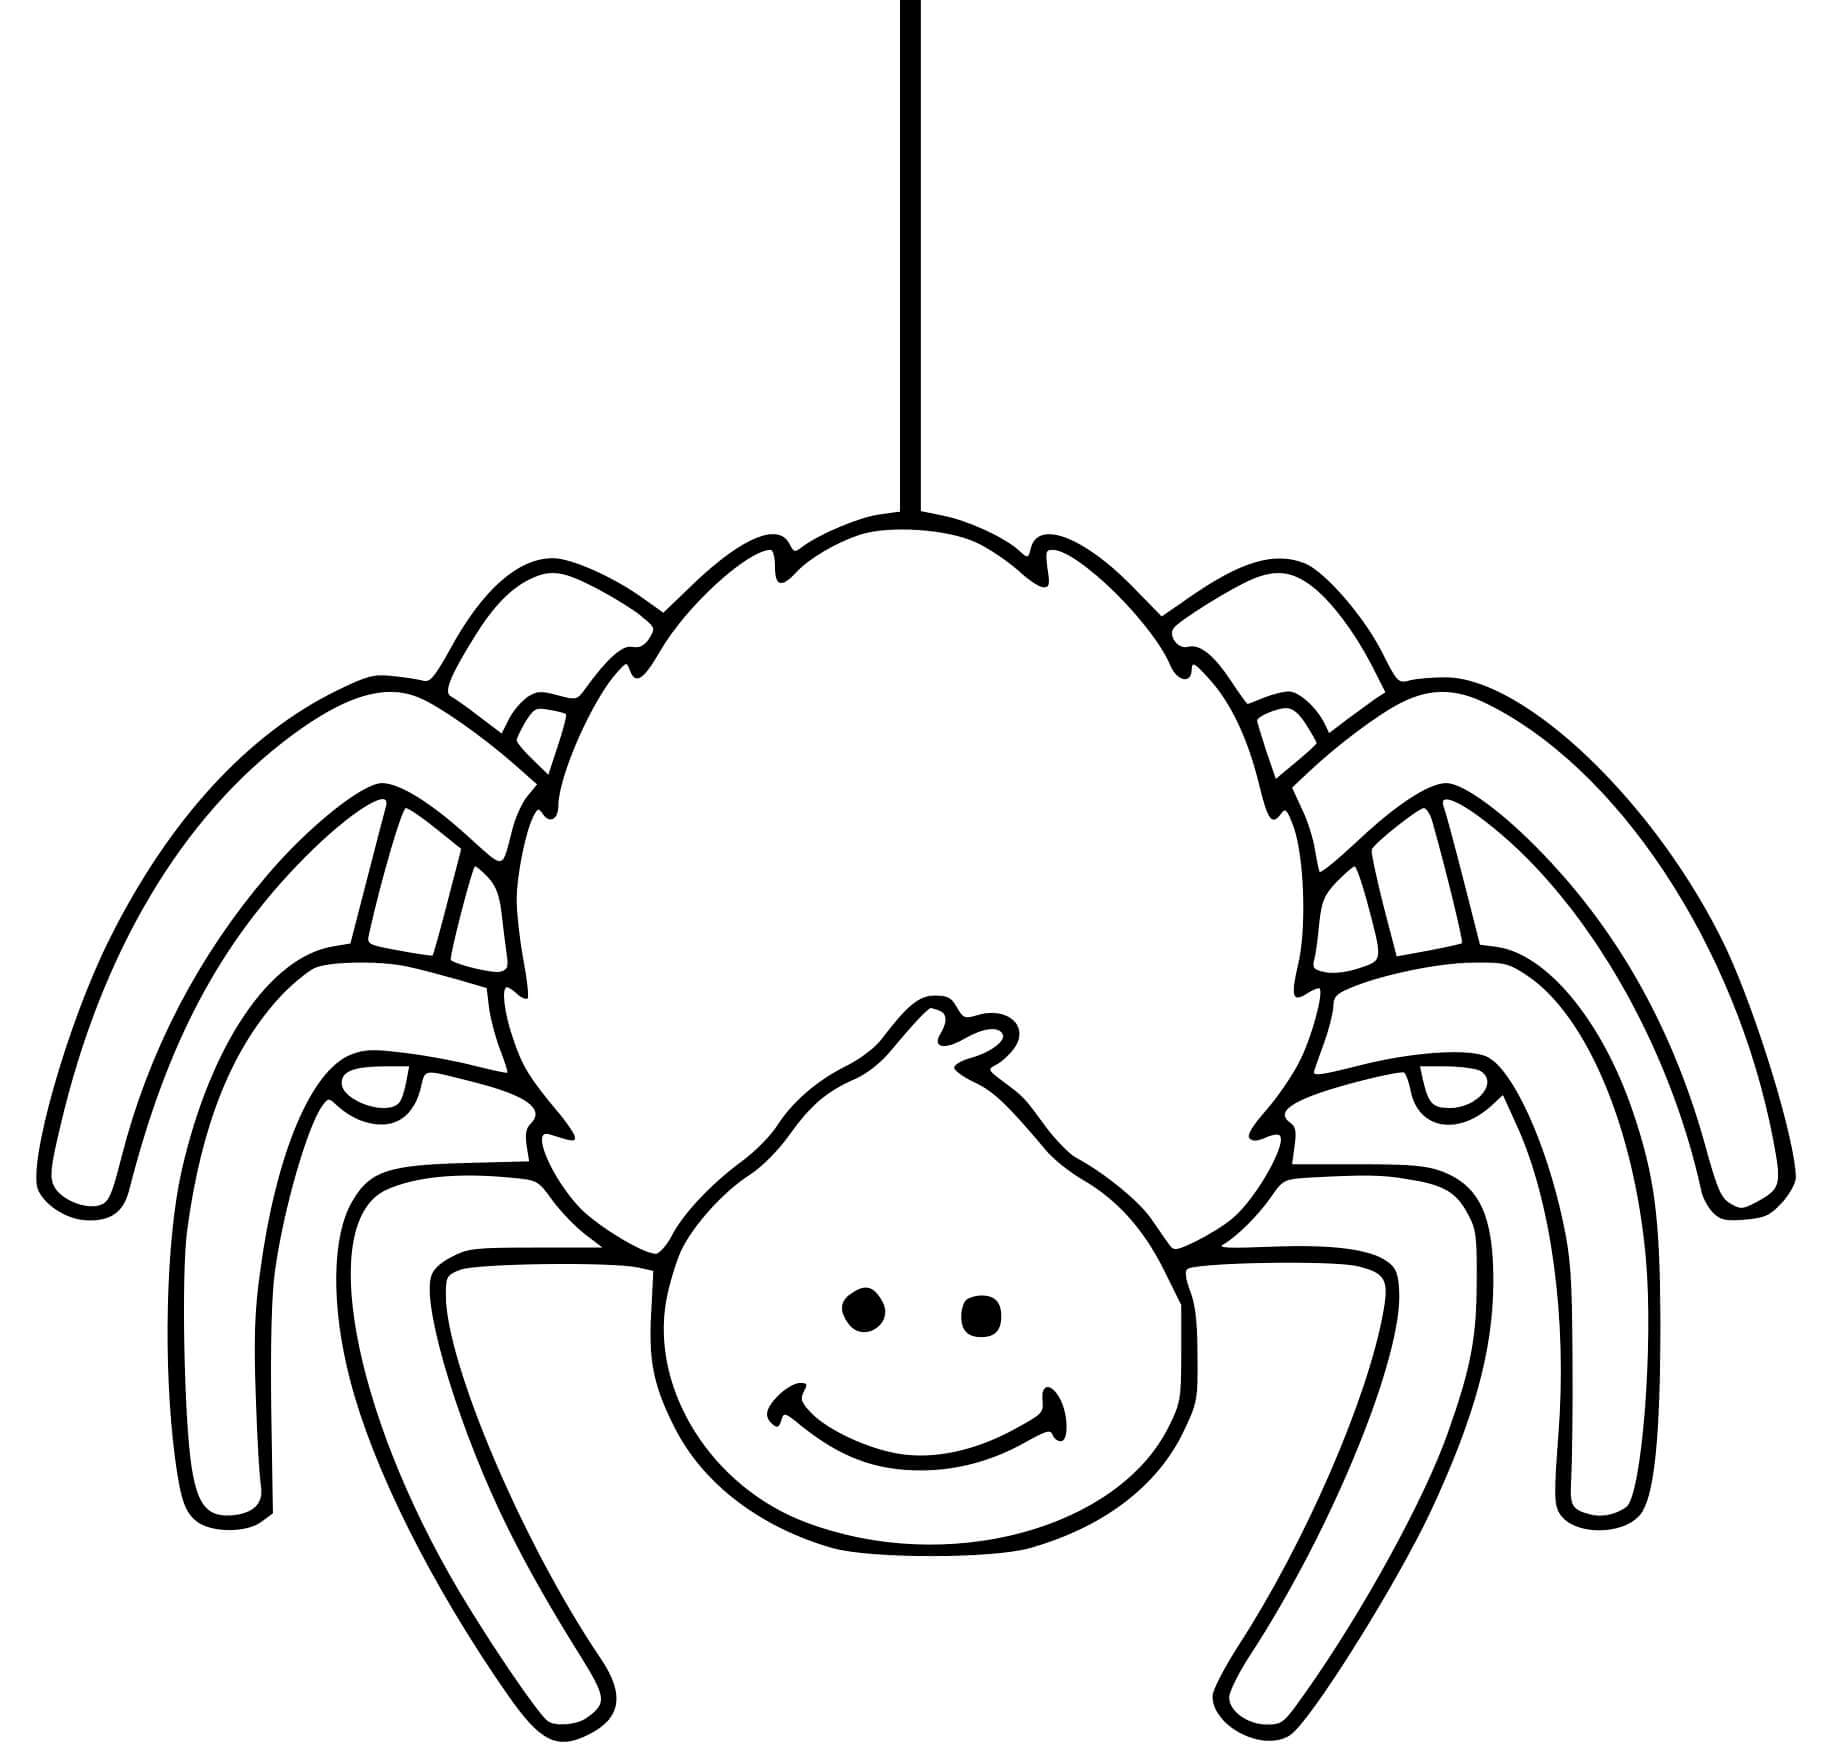 Cute Spider Web Coloring Pages - SheetalColor.com